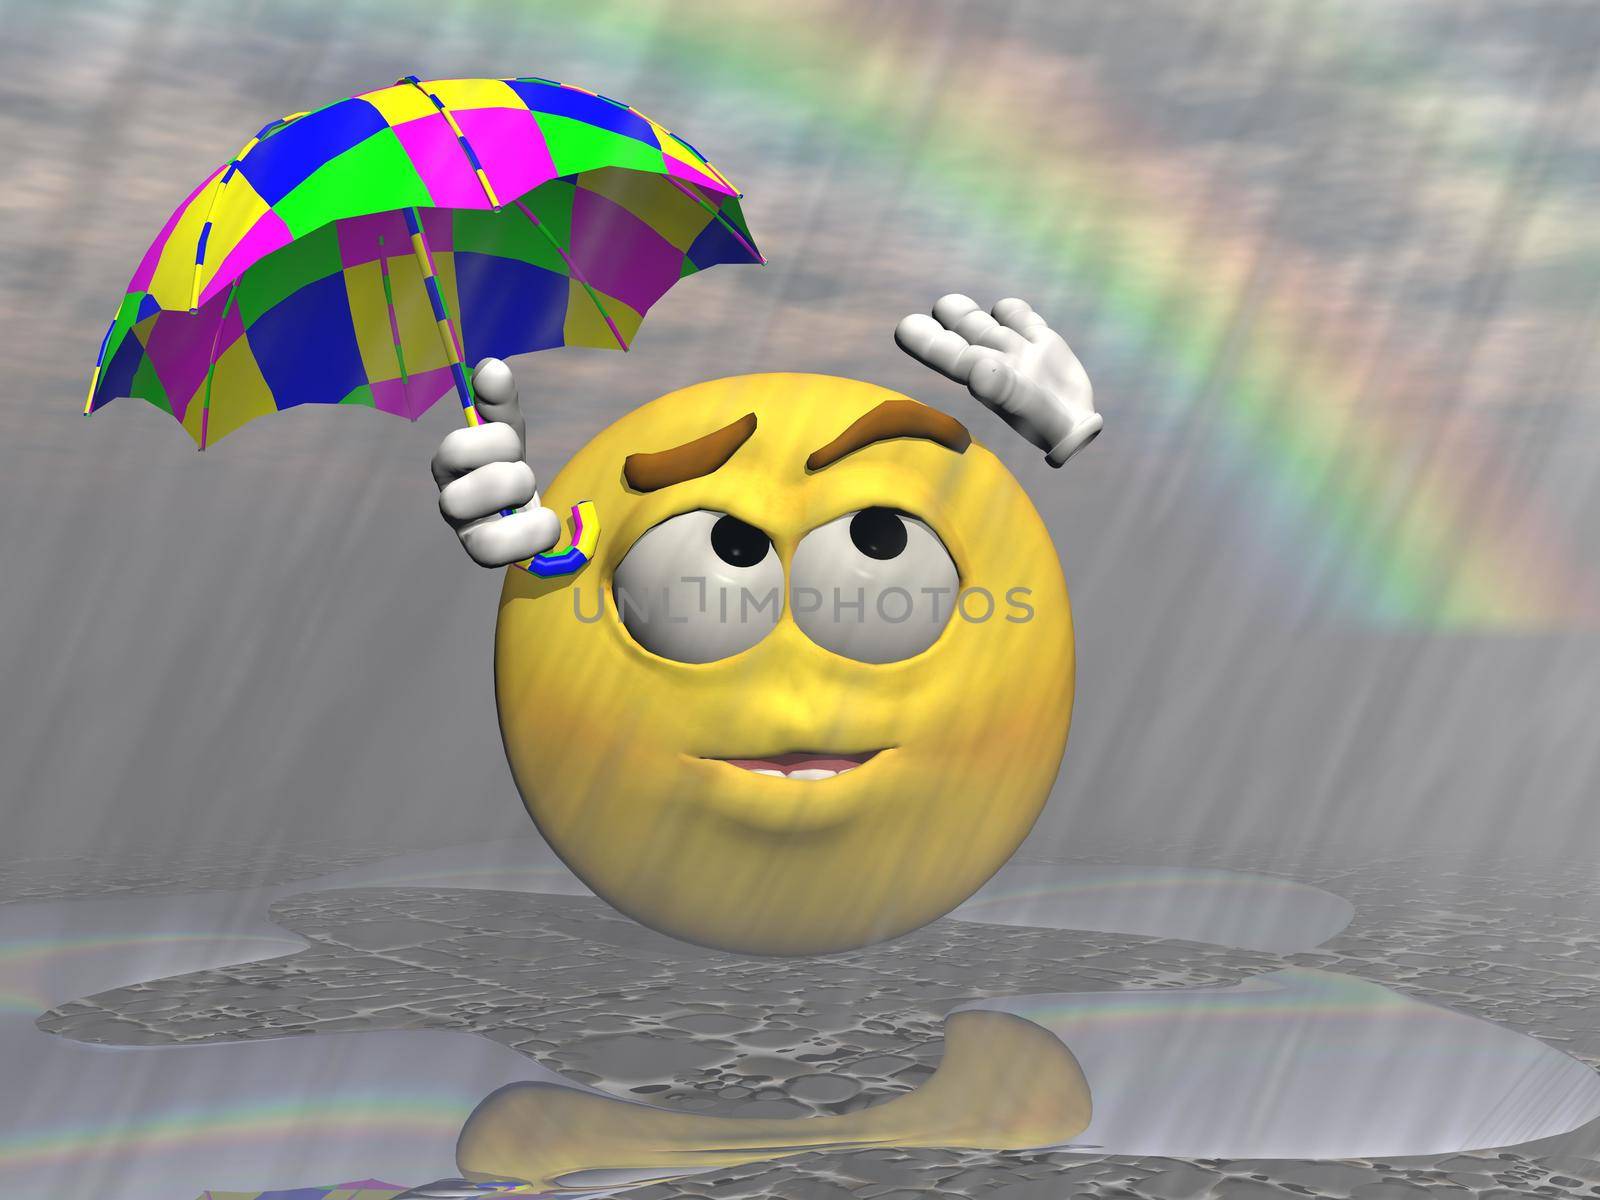 Emoticon rain and umbrella with a rainbow